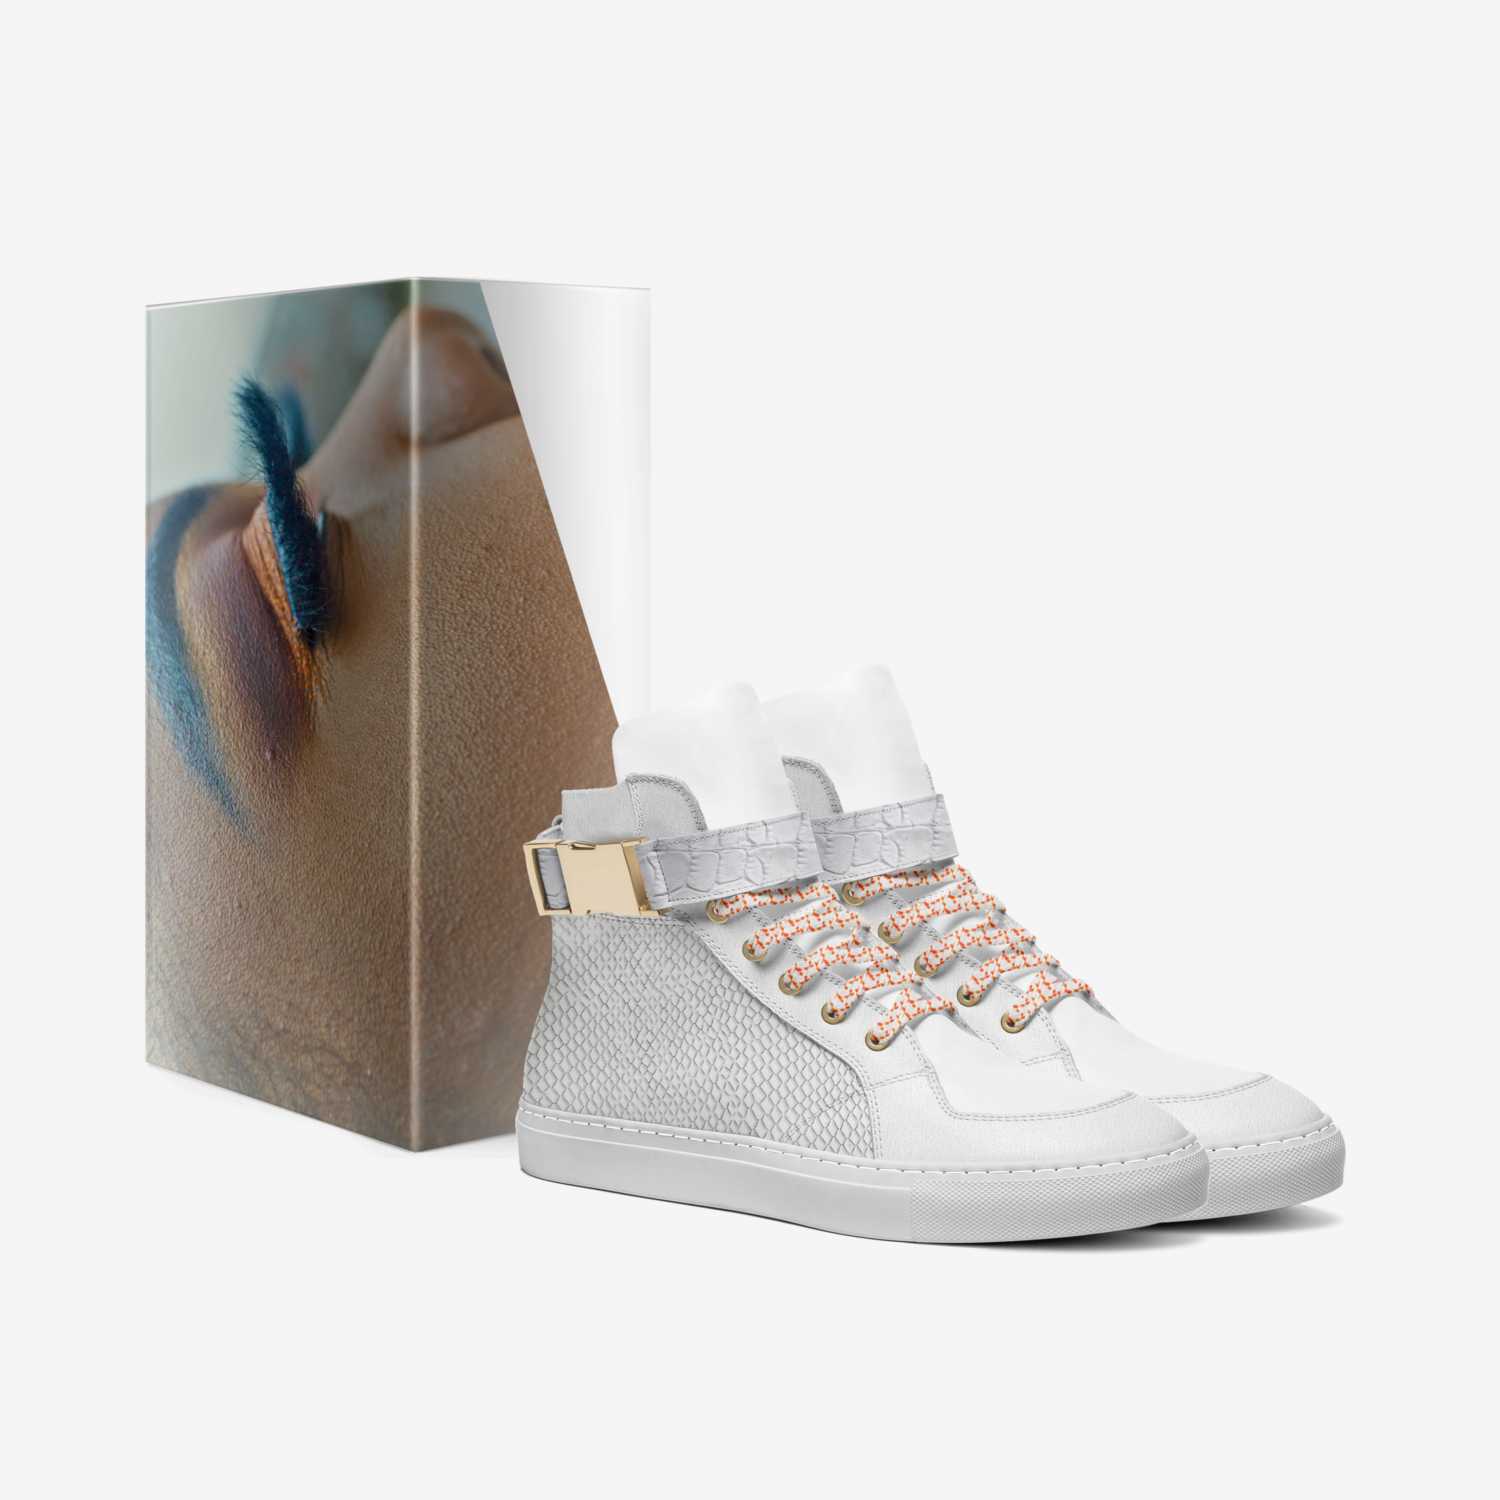 Shlay custom made in Italy shoes by Theodora Howard | Box view